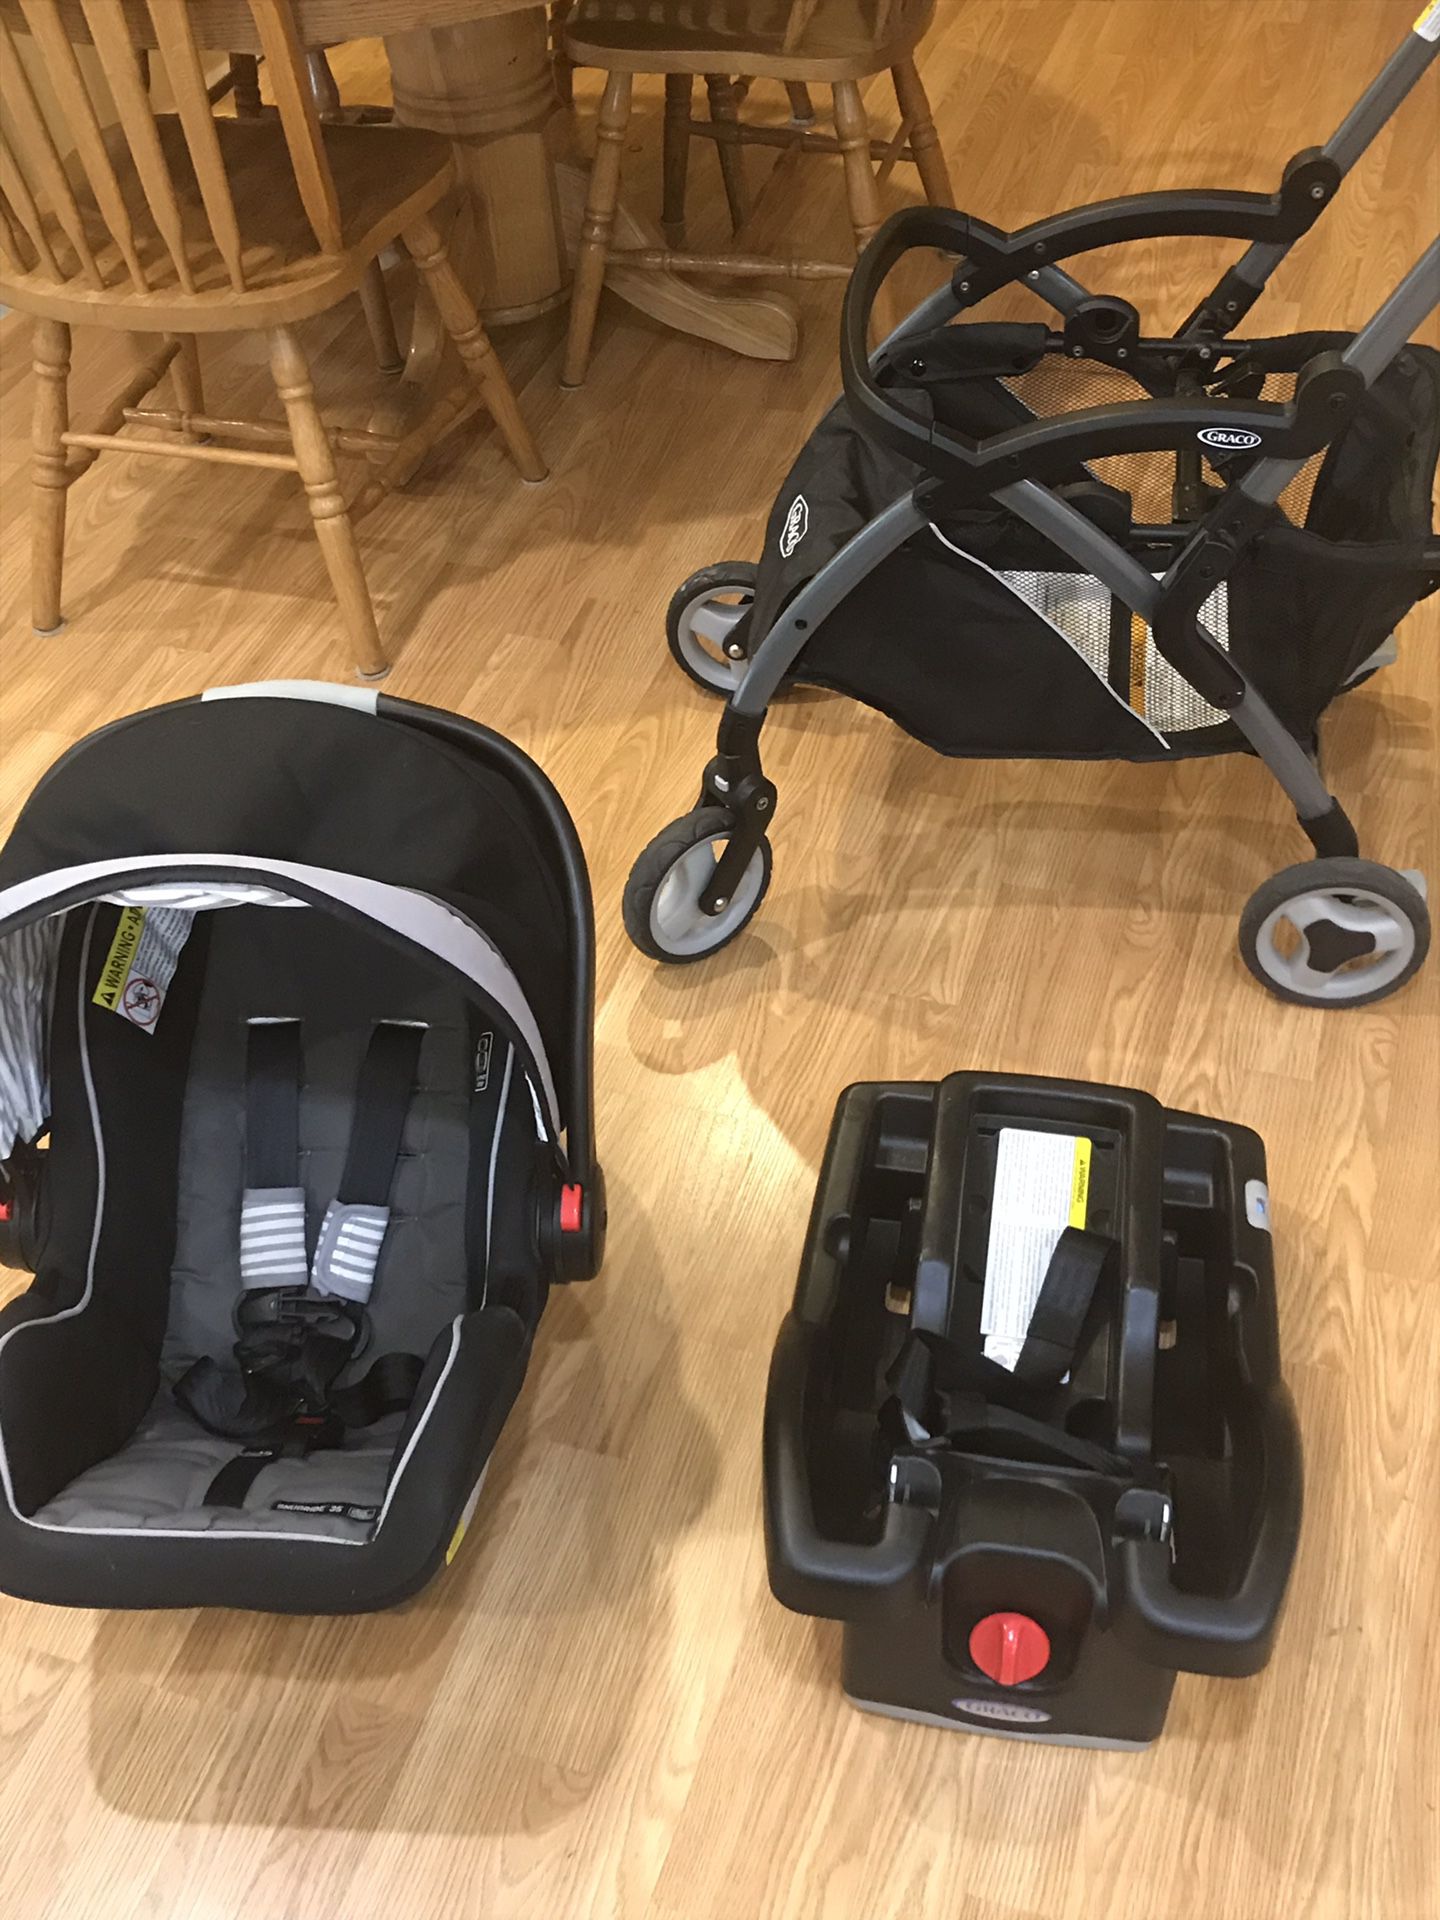 Graco SnugRide 35 infant car seat, base, and stroller